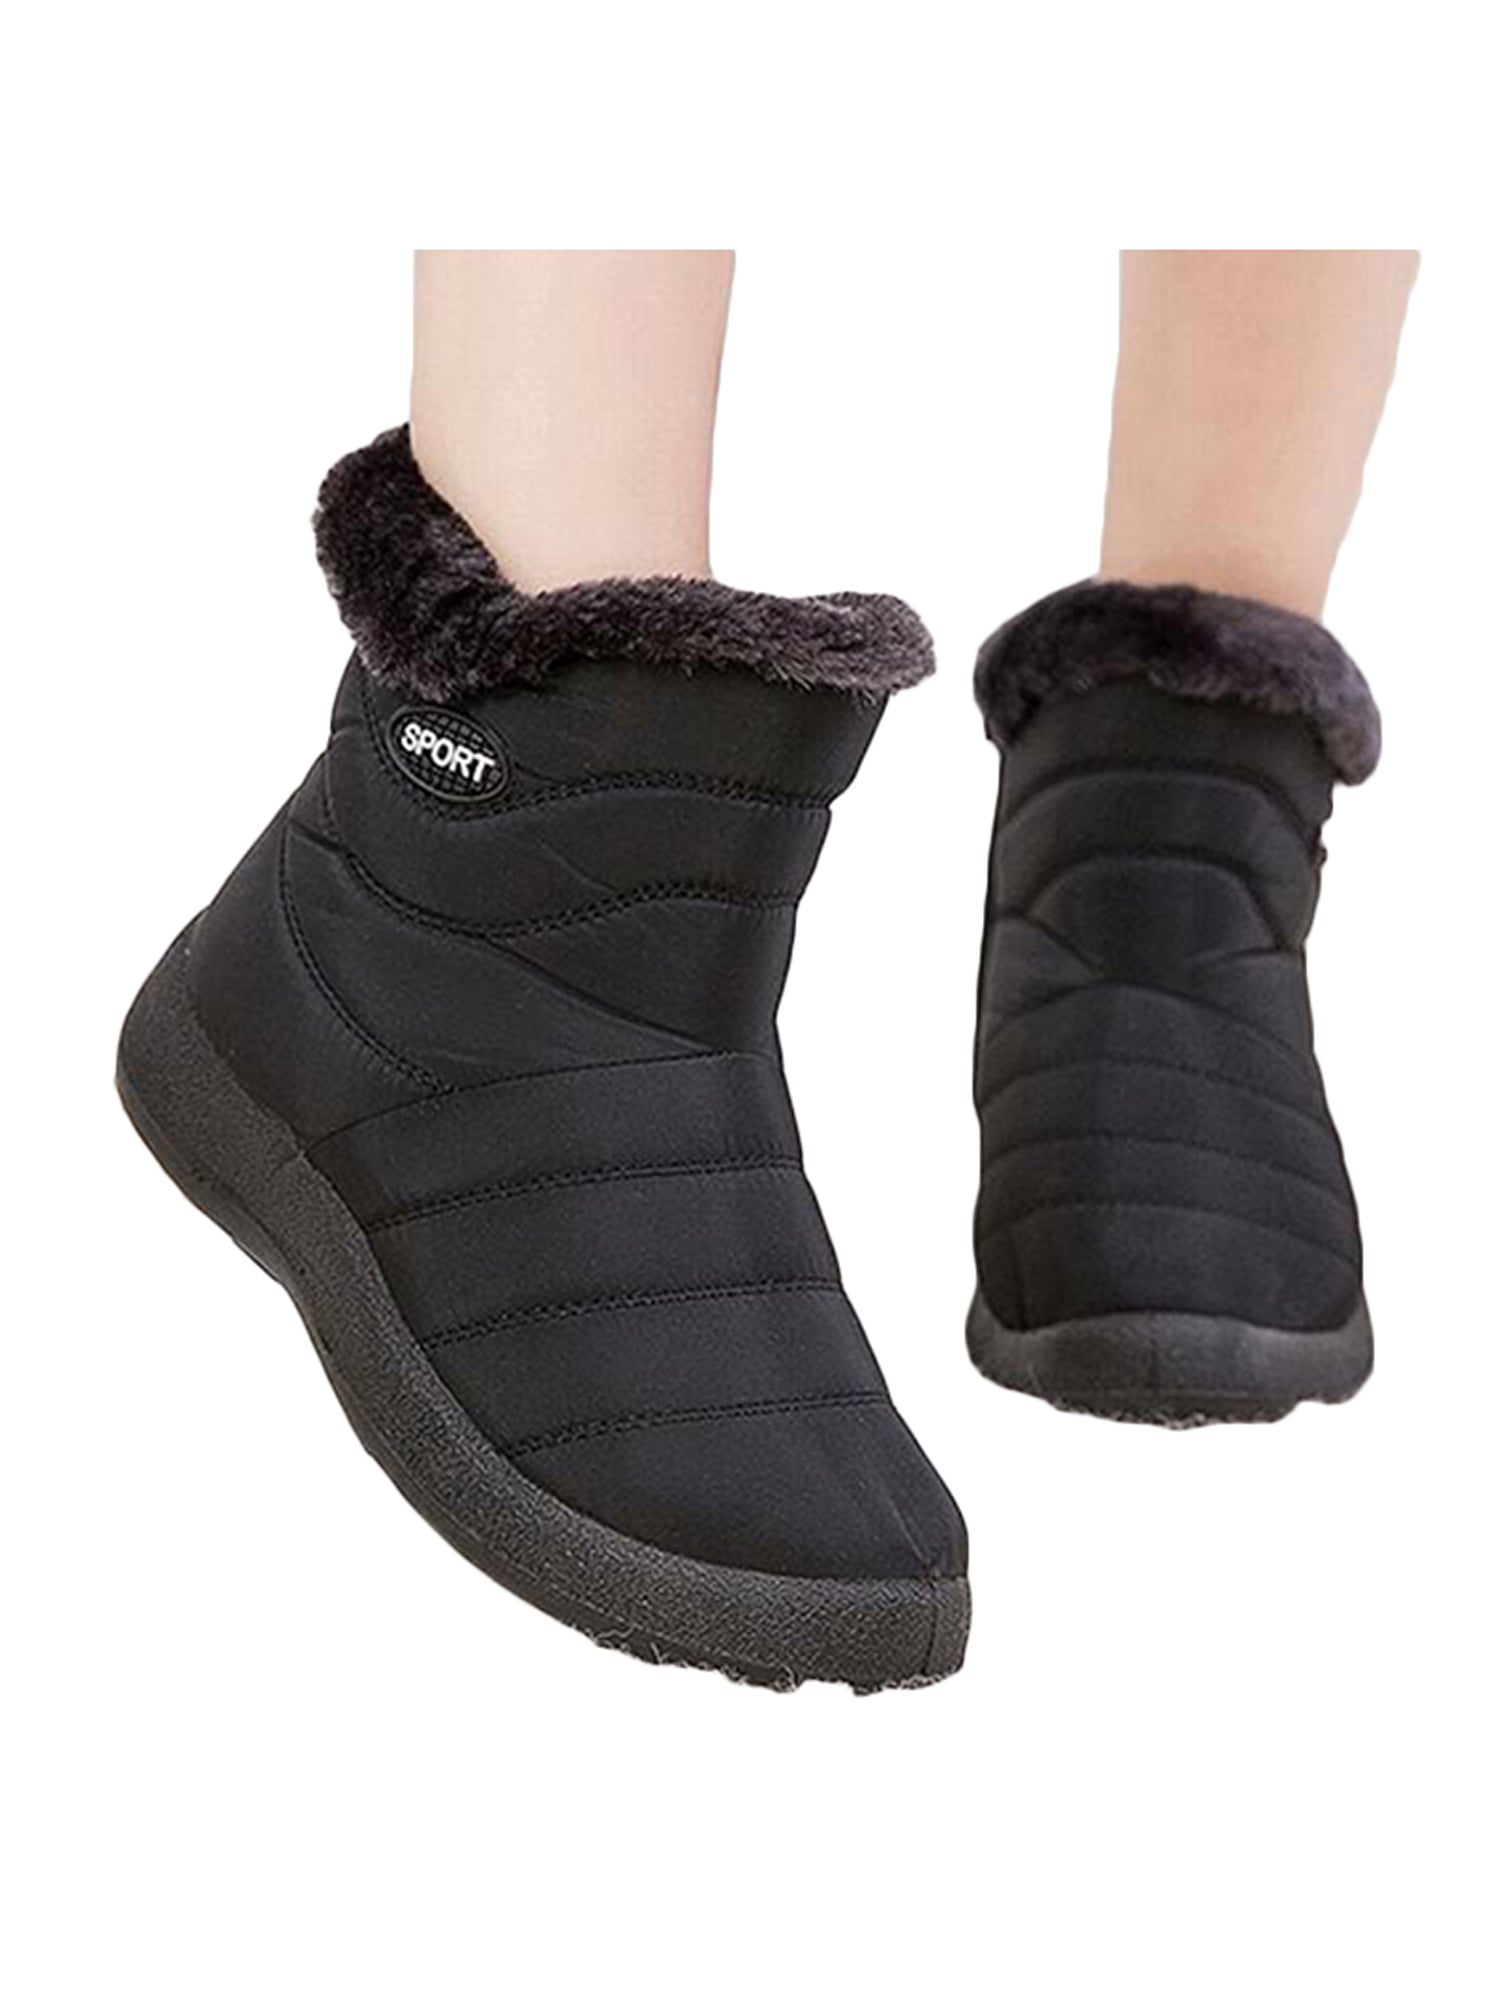 Women's Winter Boots Faux Suede Folded Buckle Strap Zipper Warm Fur Shoes Sizes 